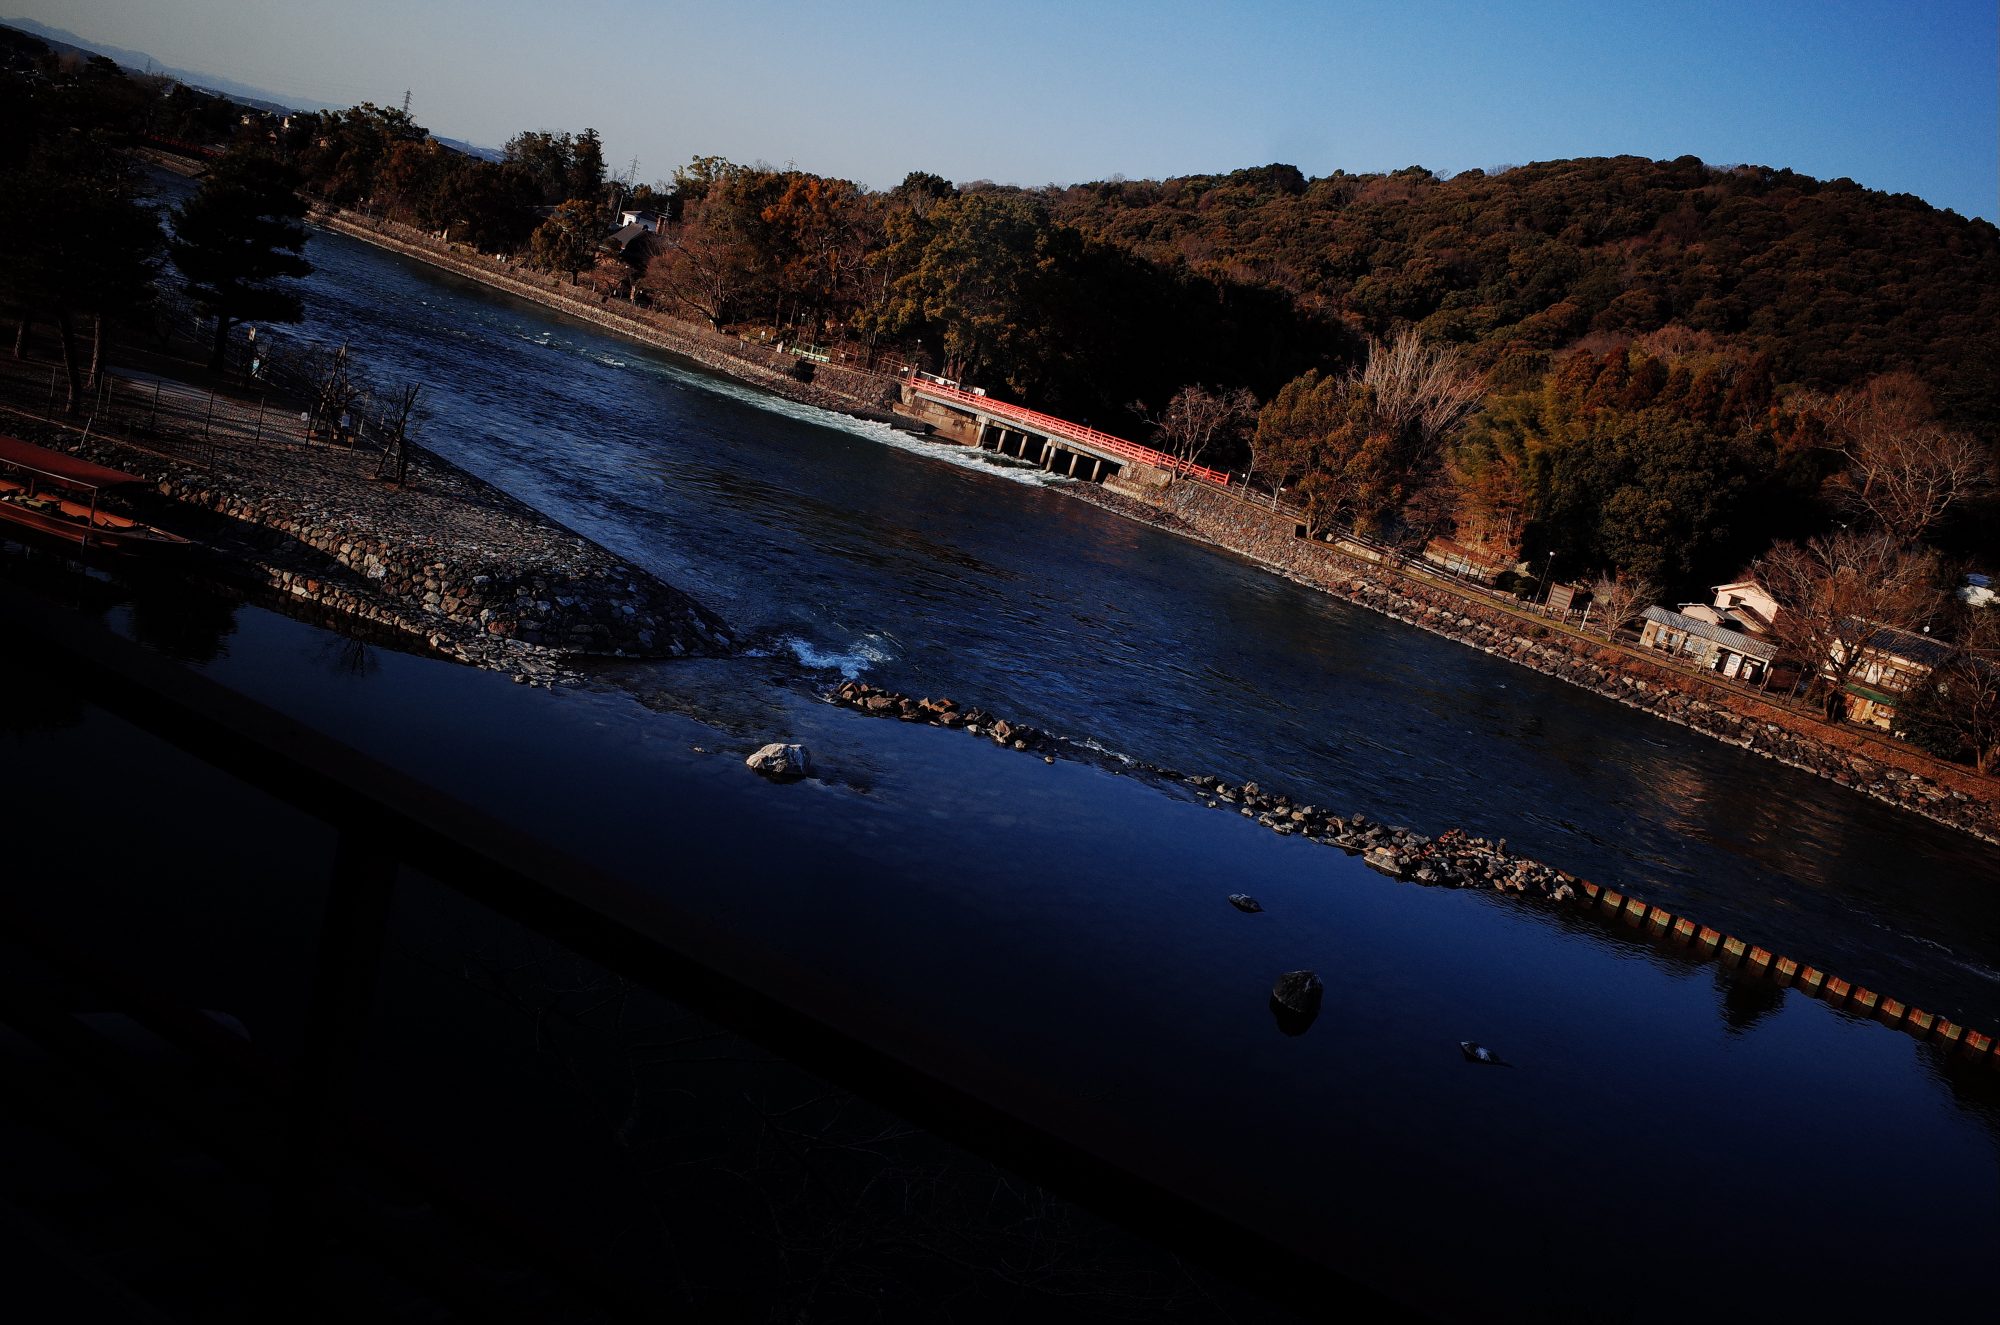 River view from Ryokan. Uji / Kyoto, 2018